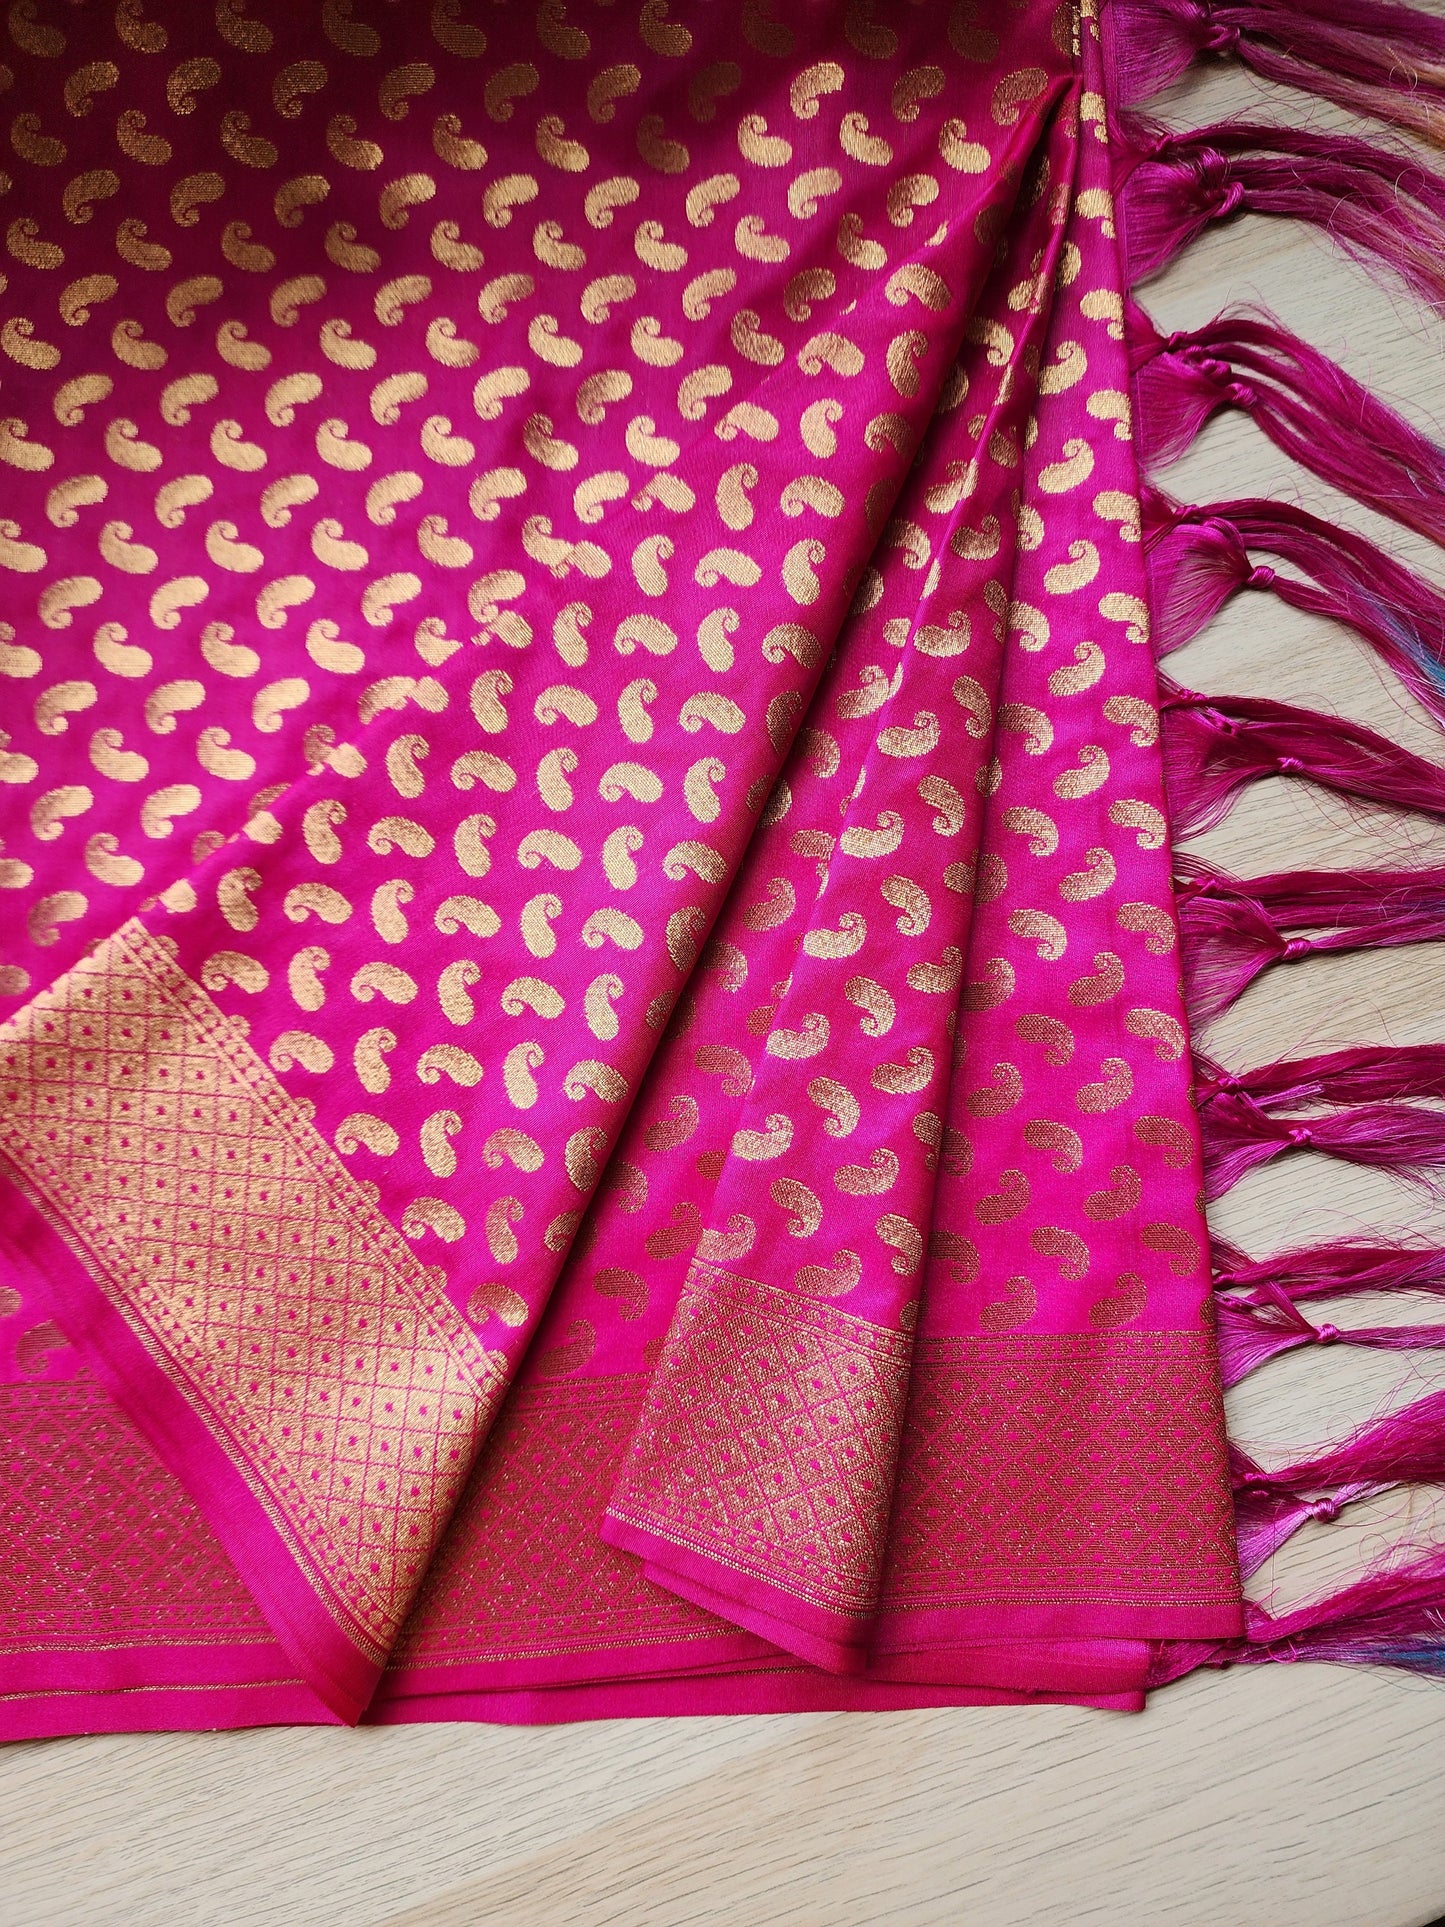 Banarasi Silk Rani Pink Color Dupatta with gold handweaving, Indian traditional and Festive designer dupatta, luxurious soft Banarsi dupatta